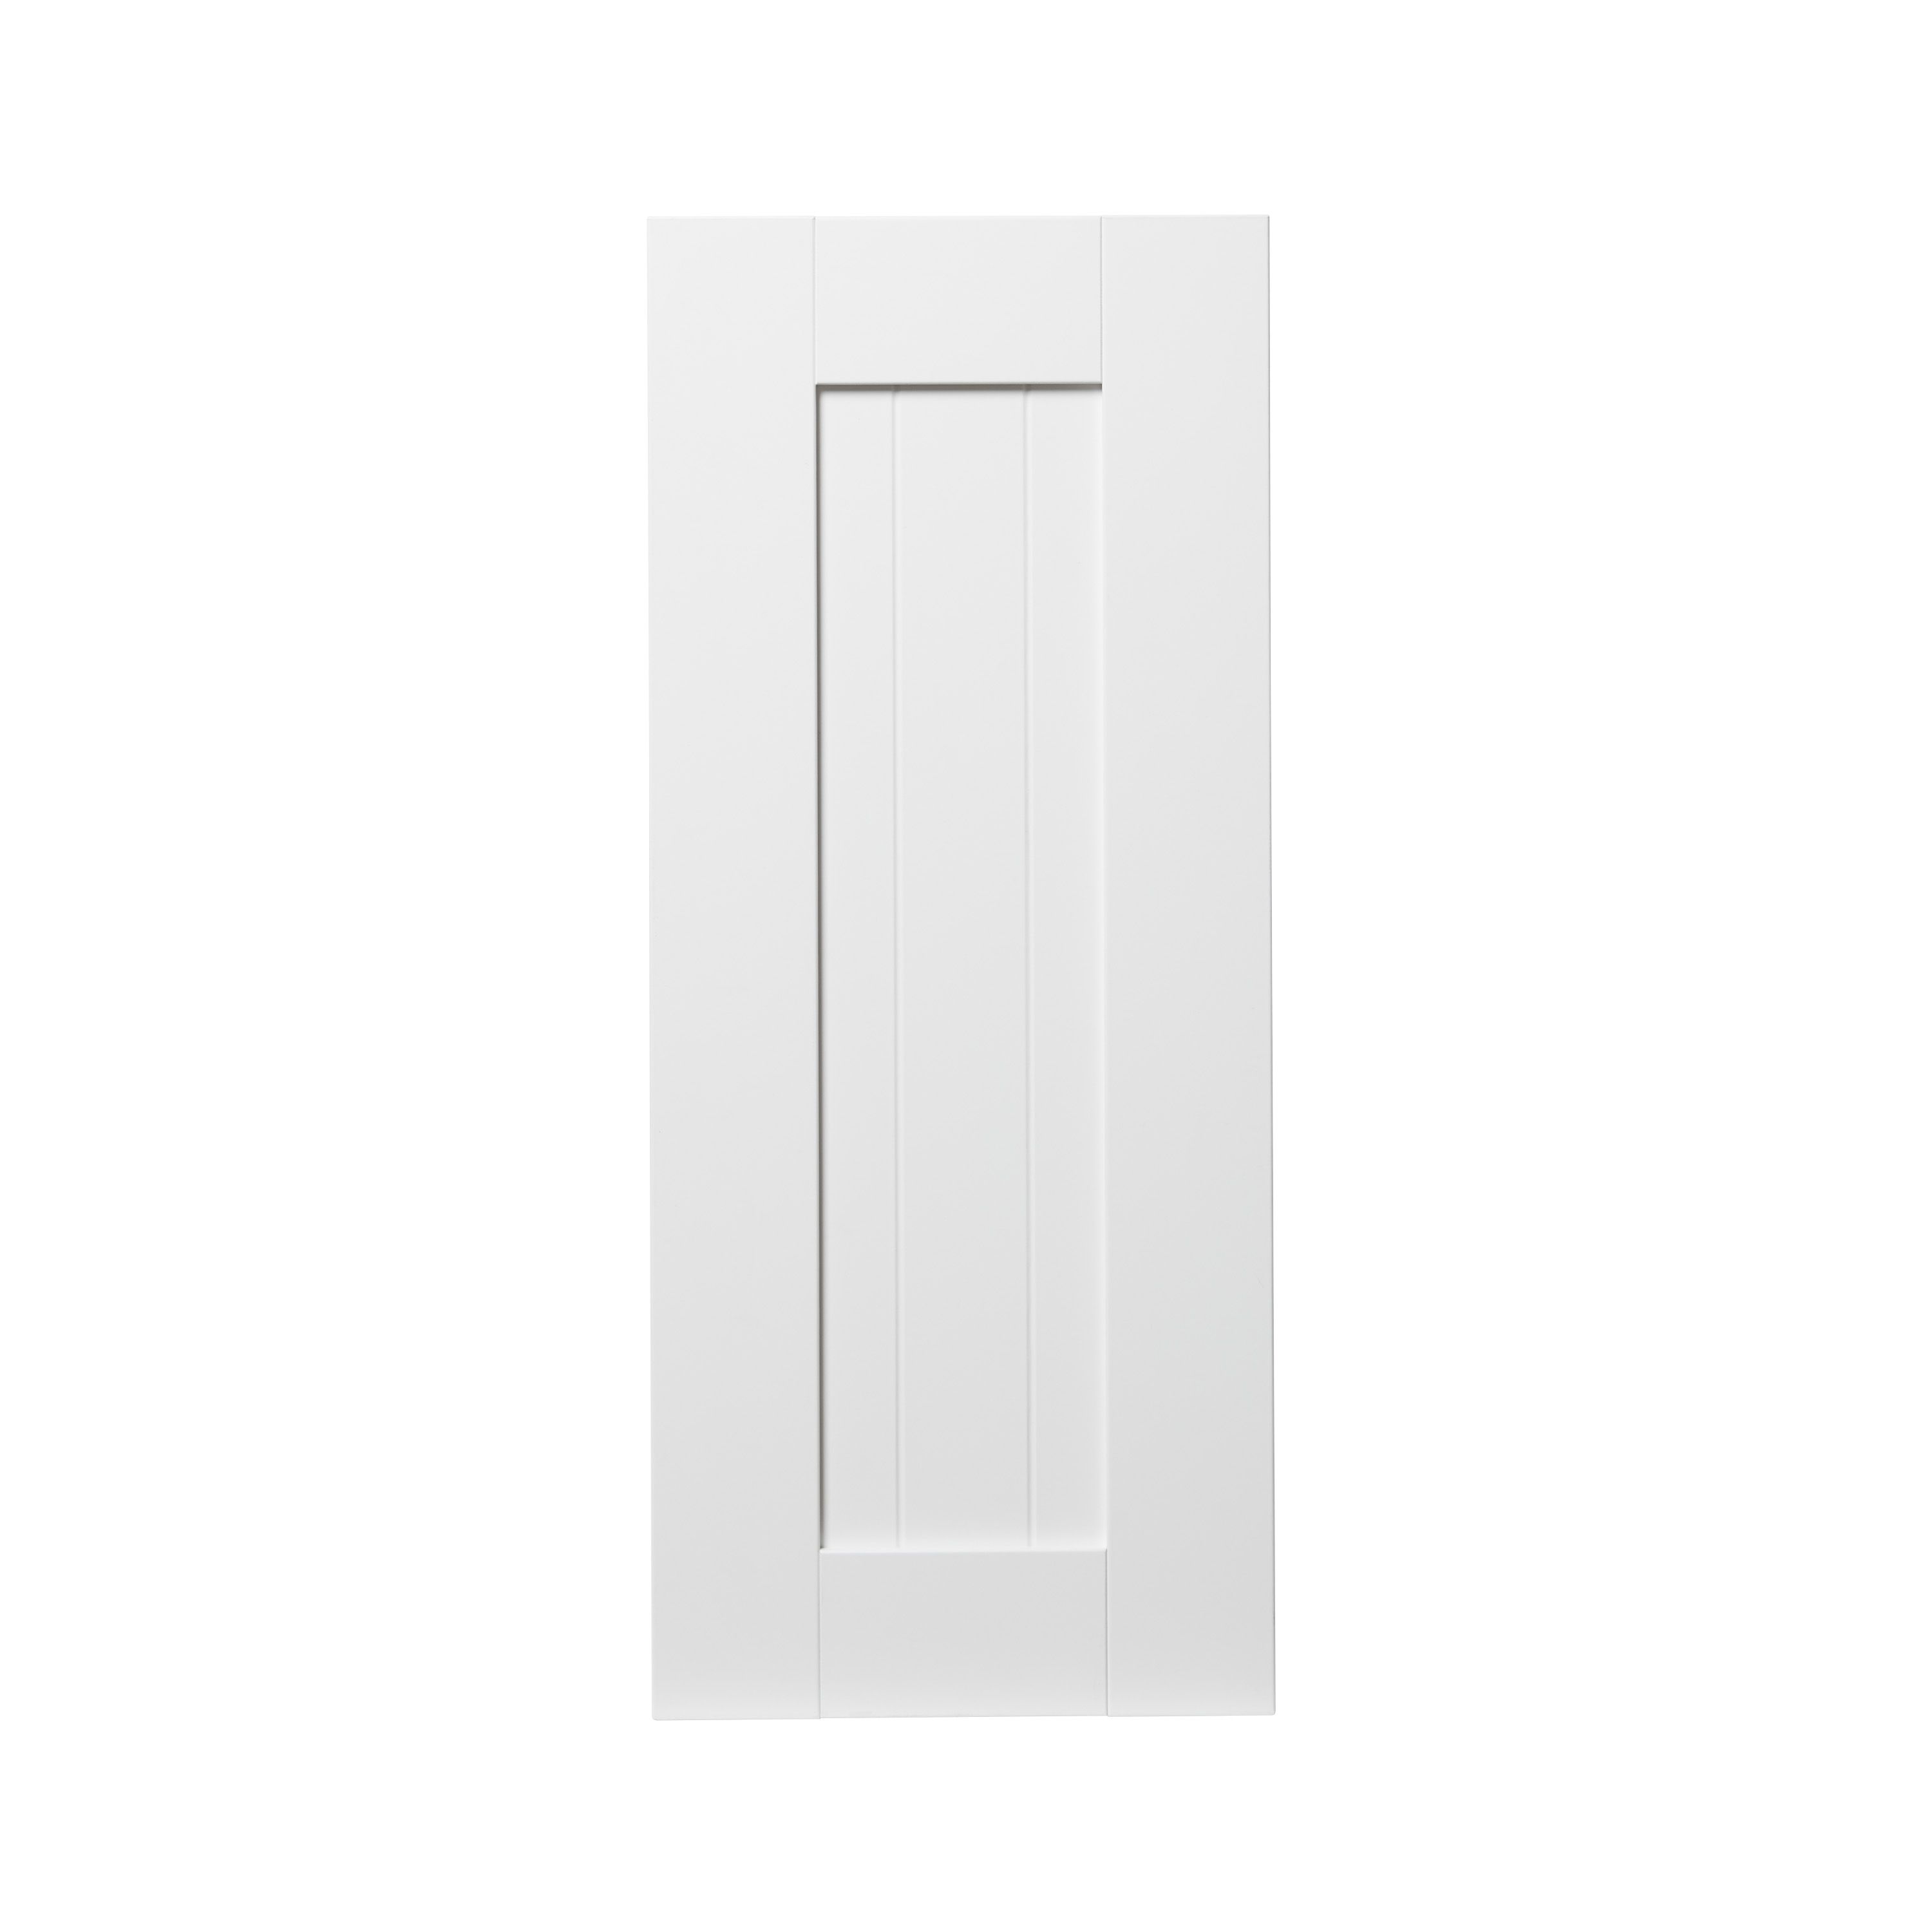 GoodHome Alpinia Matt white tongue & groove shaker Highline Cabinet door (W)300mm (H)715mm (T)18mm